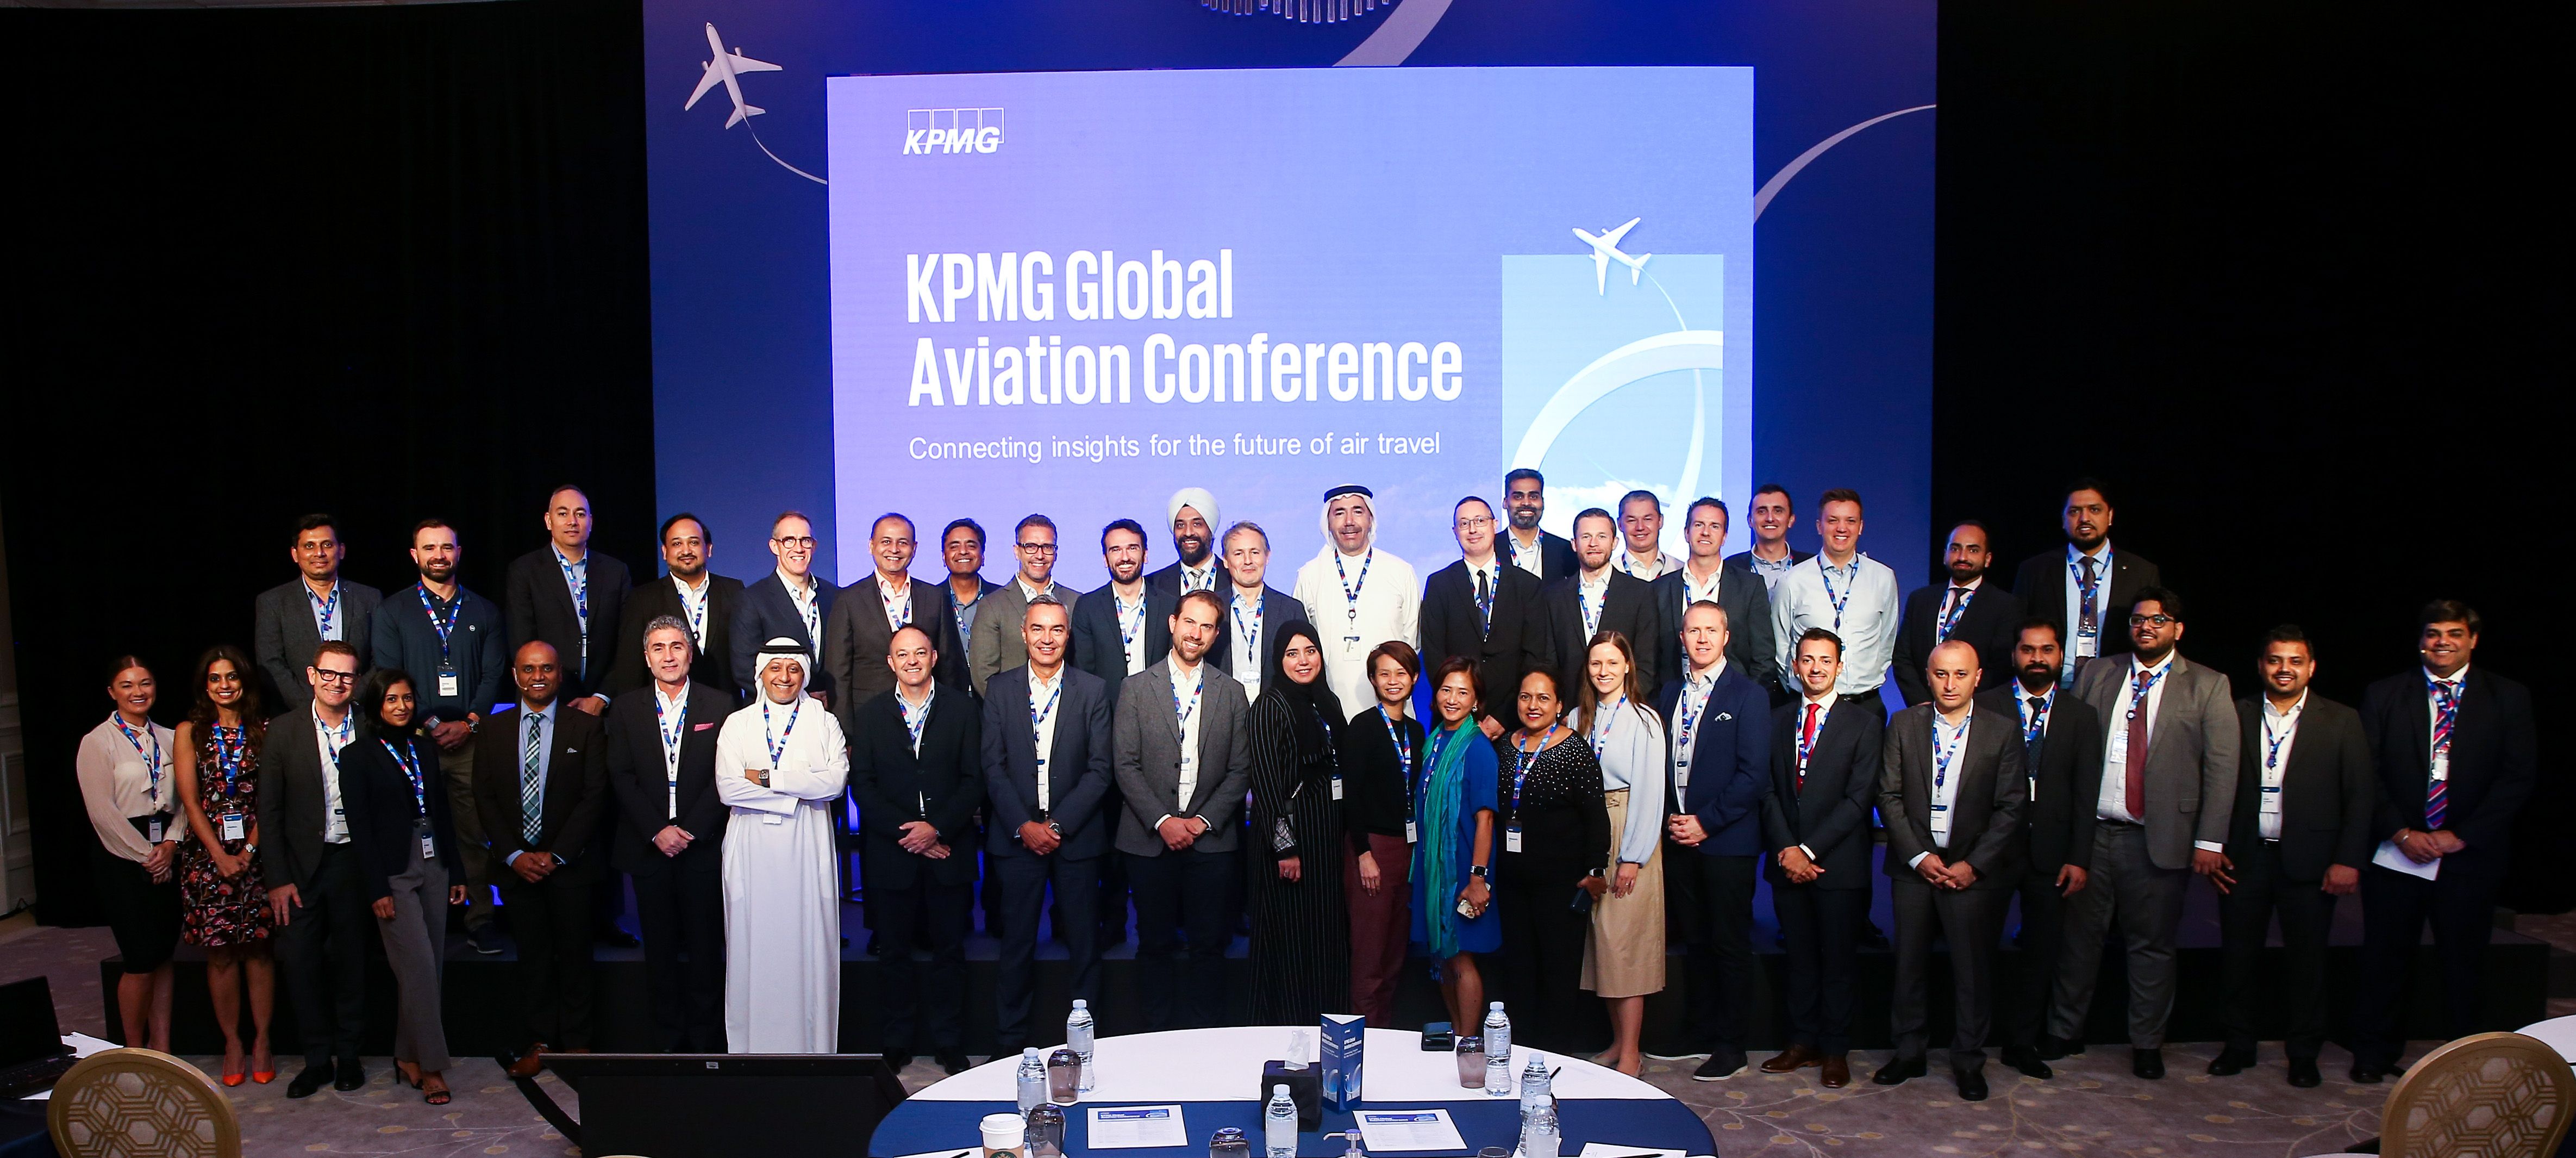 KPMG Global Aviation Conference